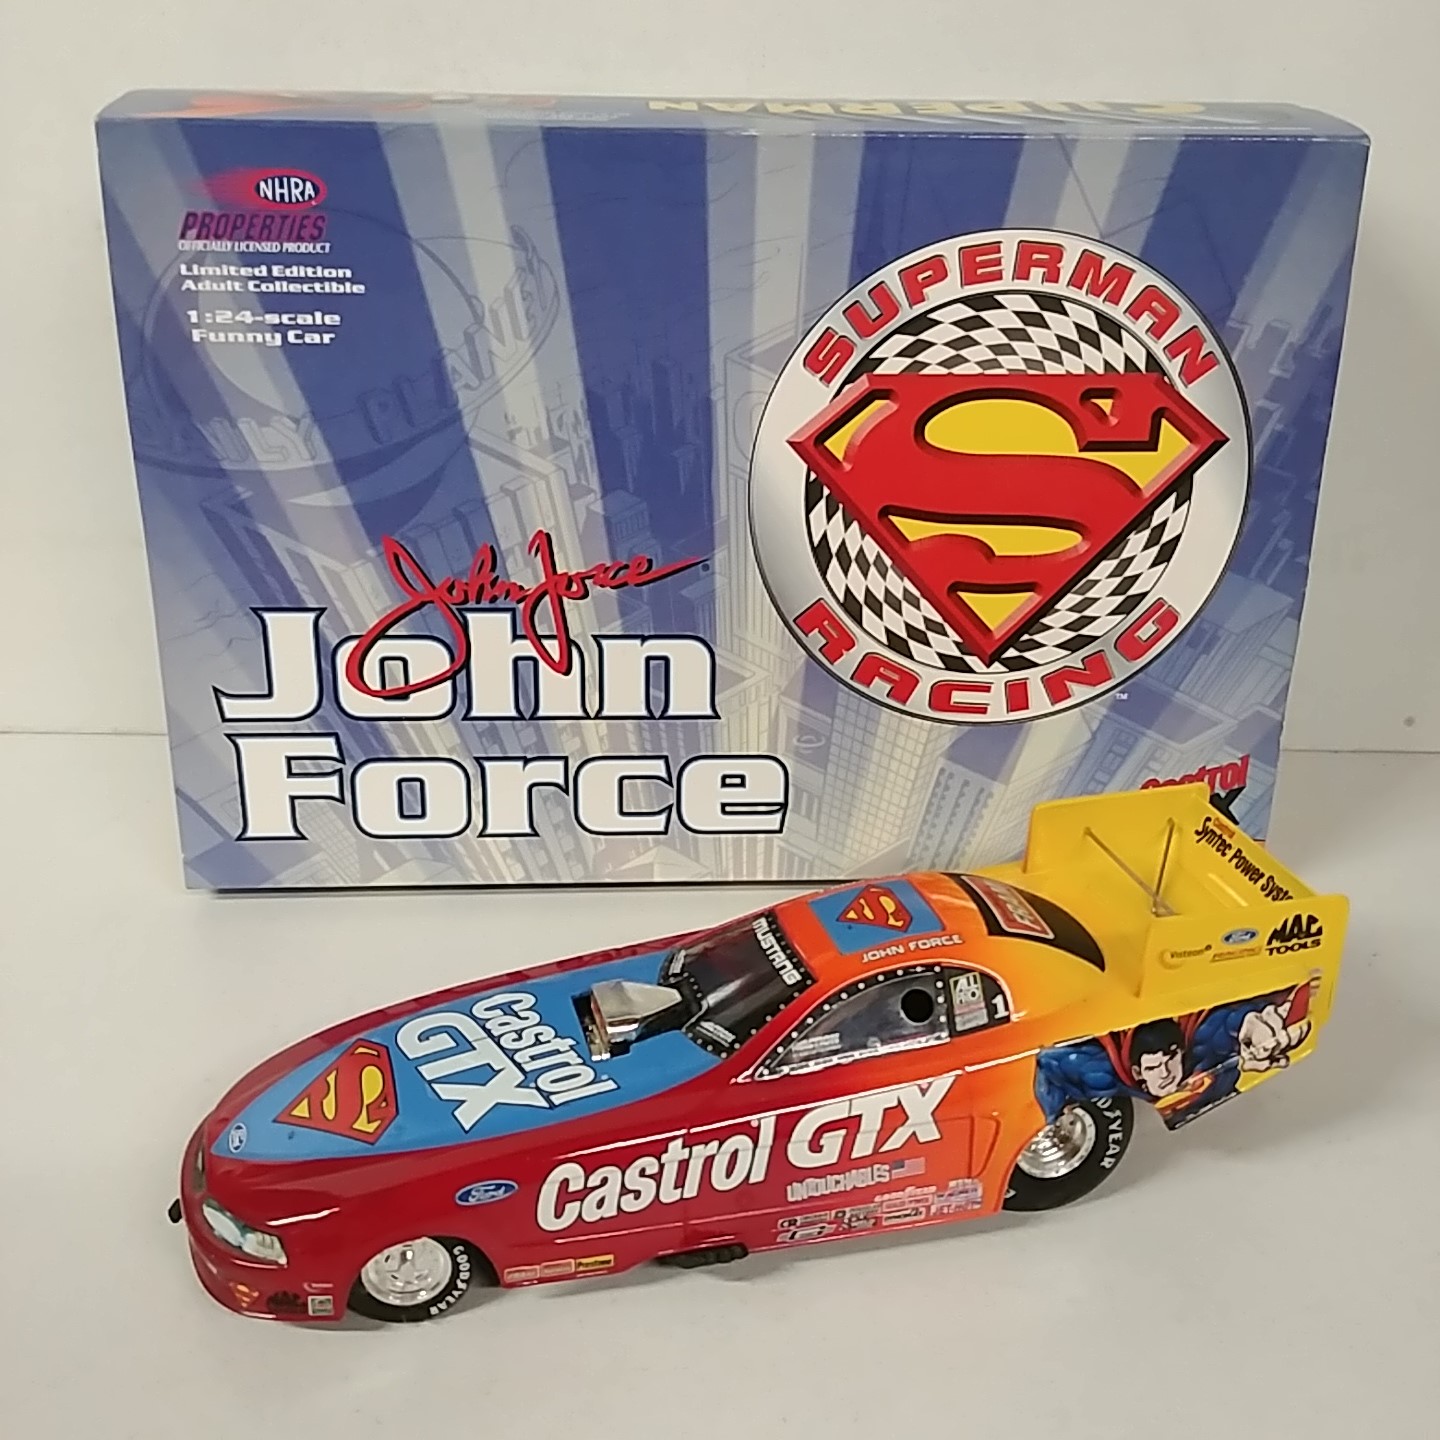 1999 John Force 1/24th Castrol GTX "Superman" funny car